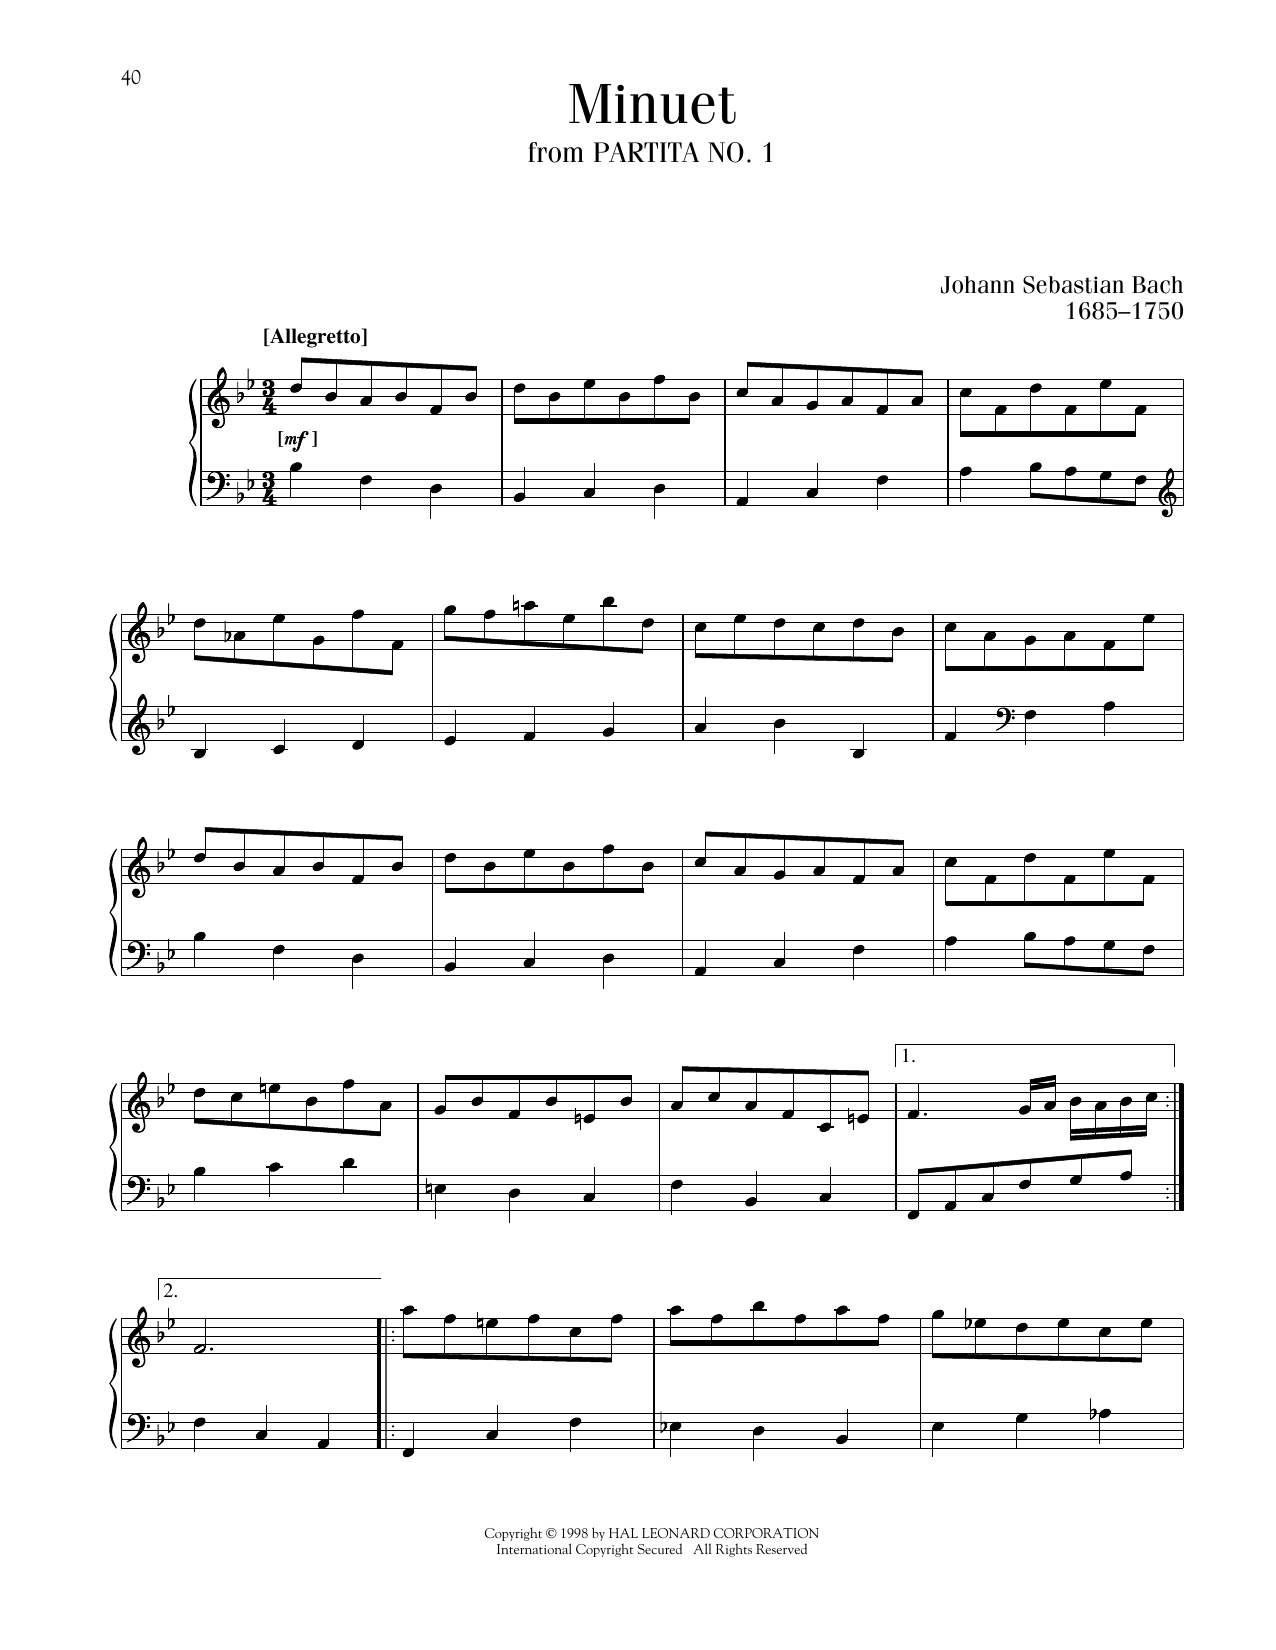 Johann Sebastian Bach Menuet Sheet Music Notes & Chords for Piano Solo - Download or Print PDF